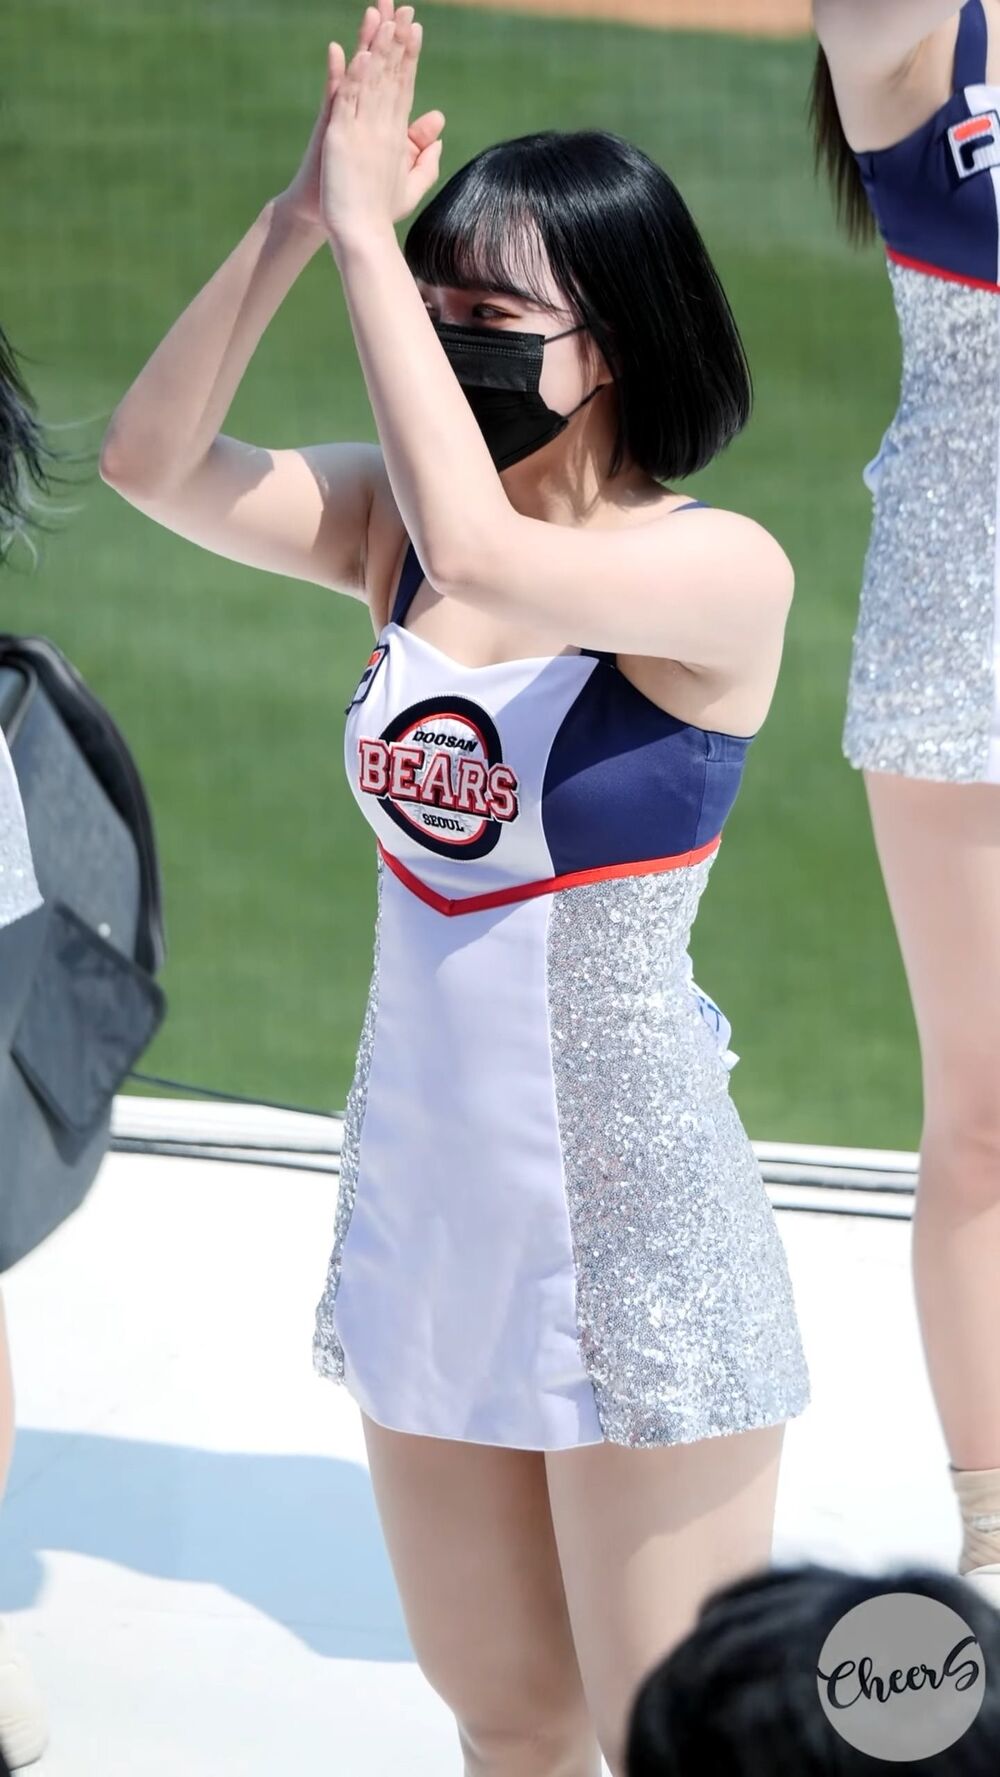 [4K] Savage 박성은 치어리더 직캠 Park Seongeun Cheerleader fancam 두산베어스 220521.mkv_20220525_110528.019.jpg